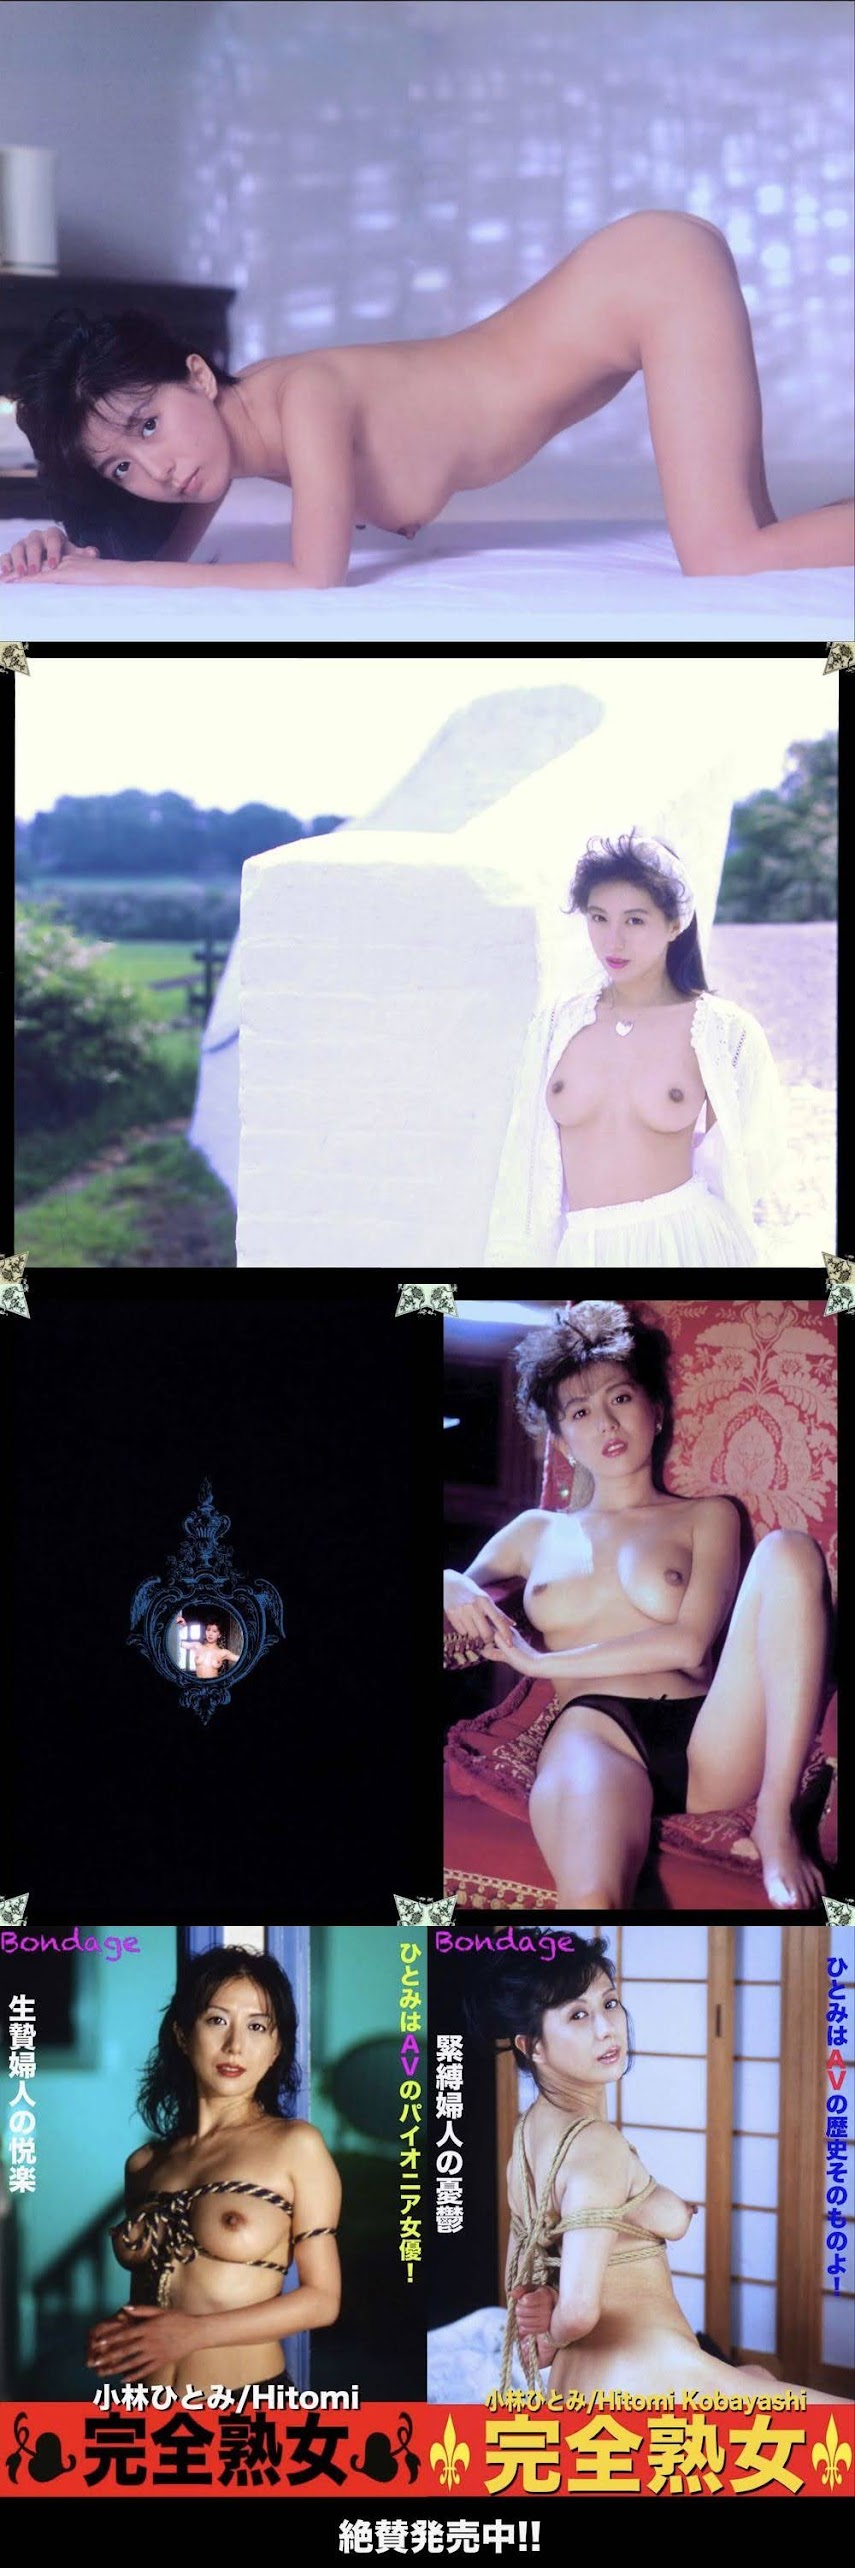 P214320.rar-jk- [Digital Photobook] Hitomi Kobayashi 小林ひとみ - Final collection ファイナルコレクション (2018-08-08)   P214320